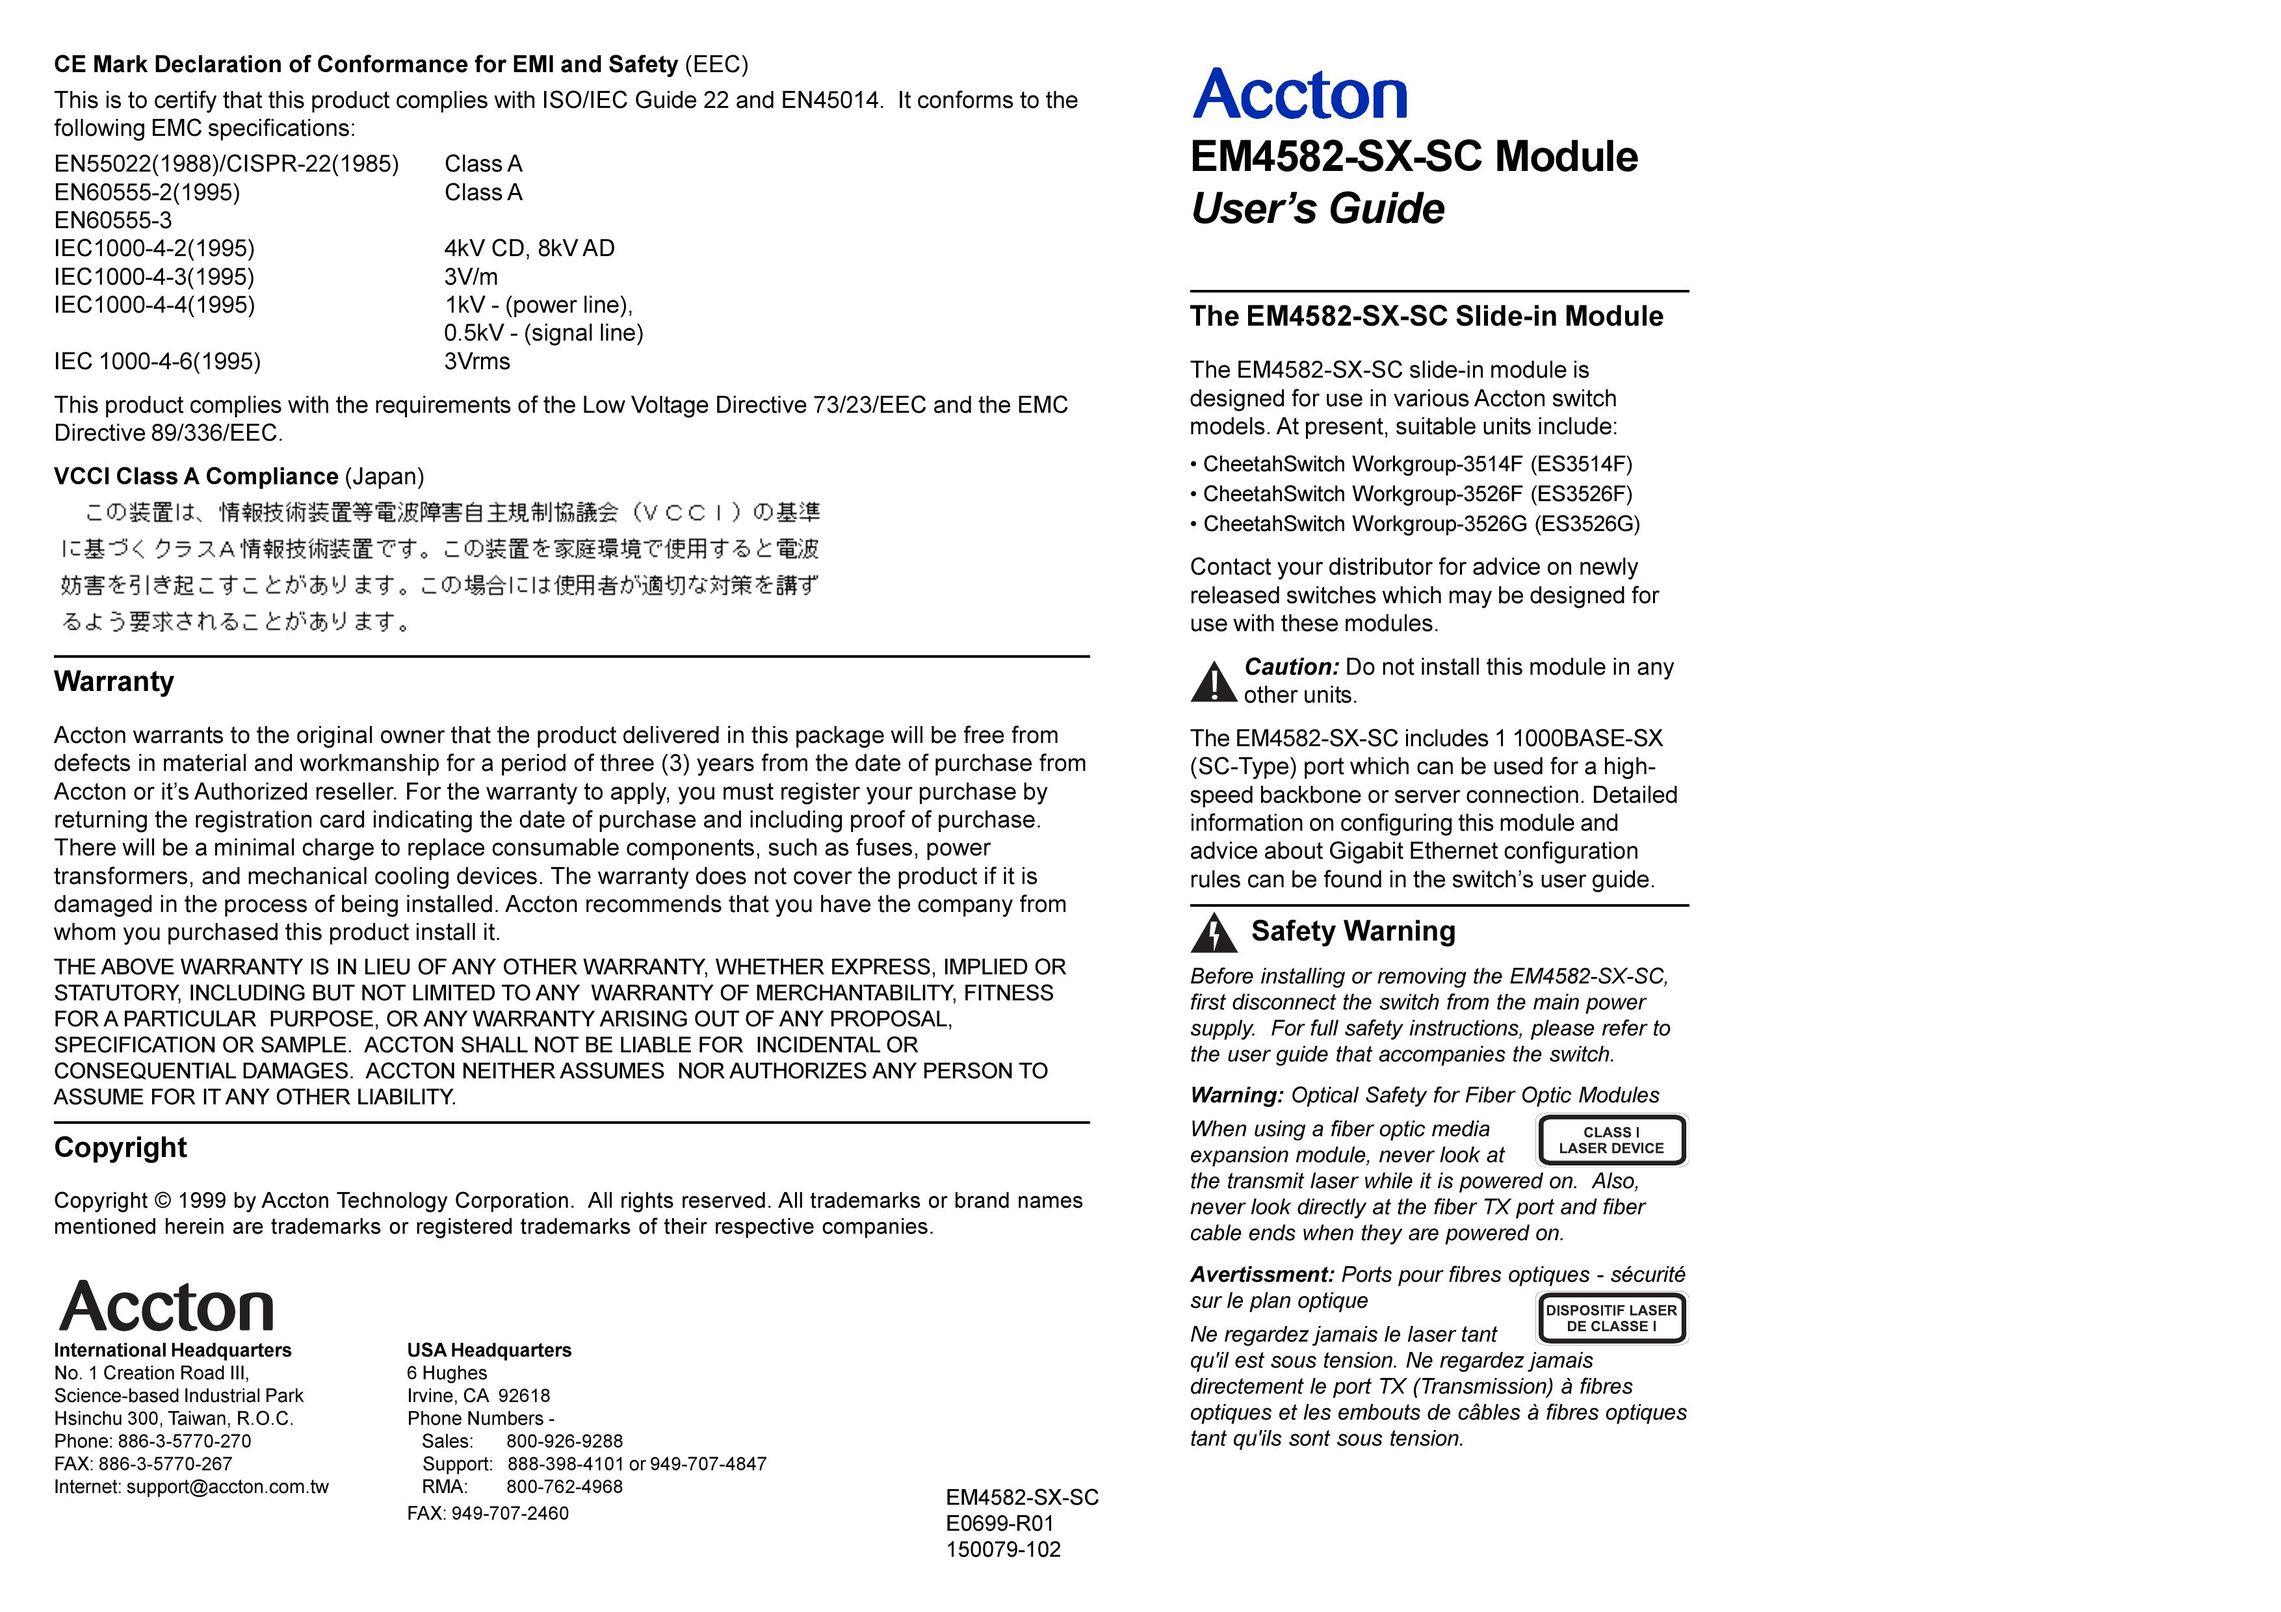 Accton Technology EM4582-SX-SC Computer Hardware User Manual